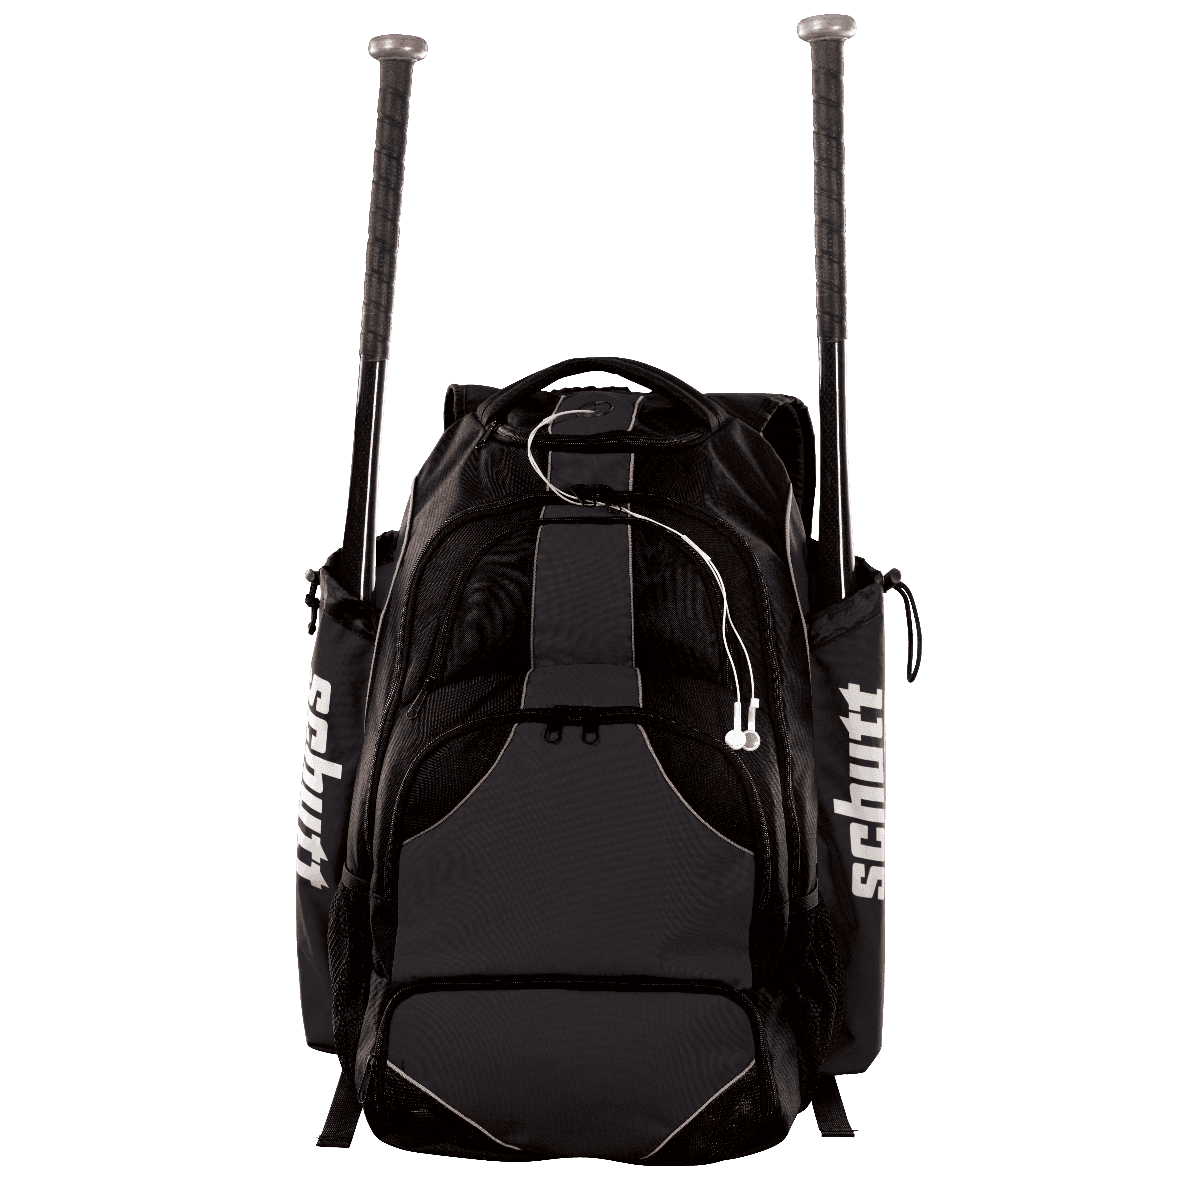 Schutt Large Travel Bat Pack Backpack Bat/Equipment Bag 12842806CC 